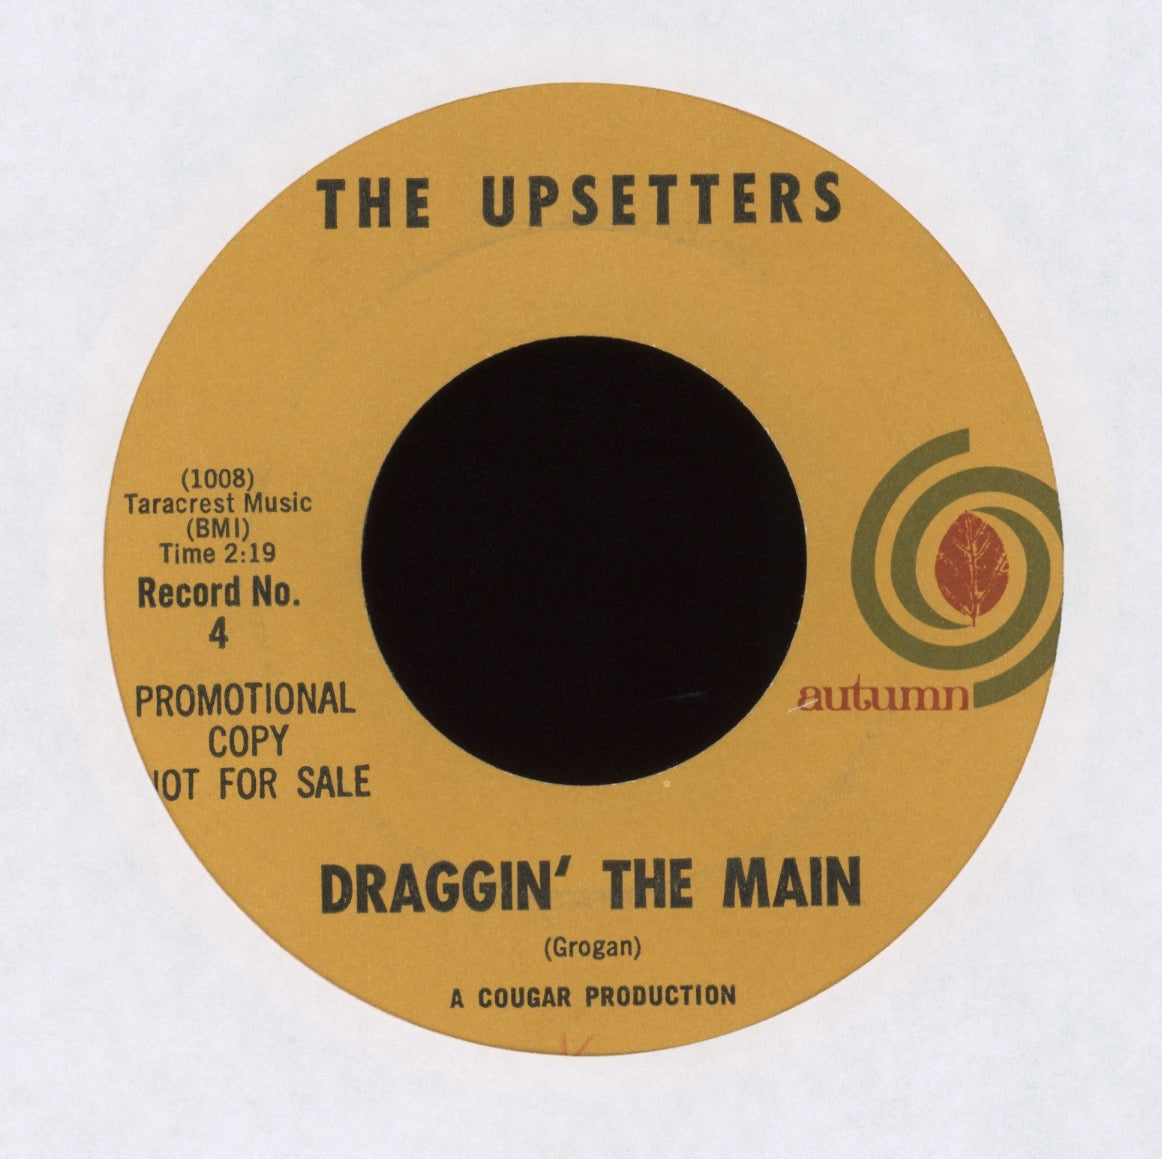 The Upsetters - Draggin' The Main on Autumn Promo